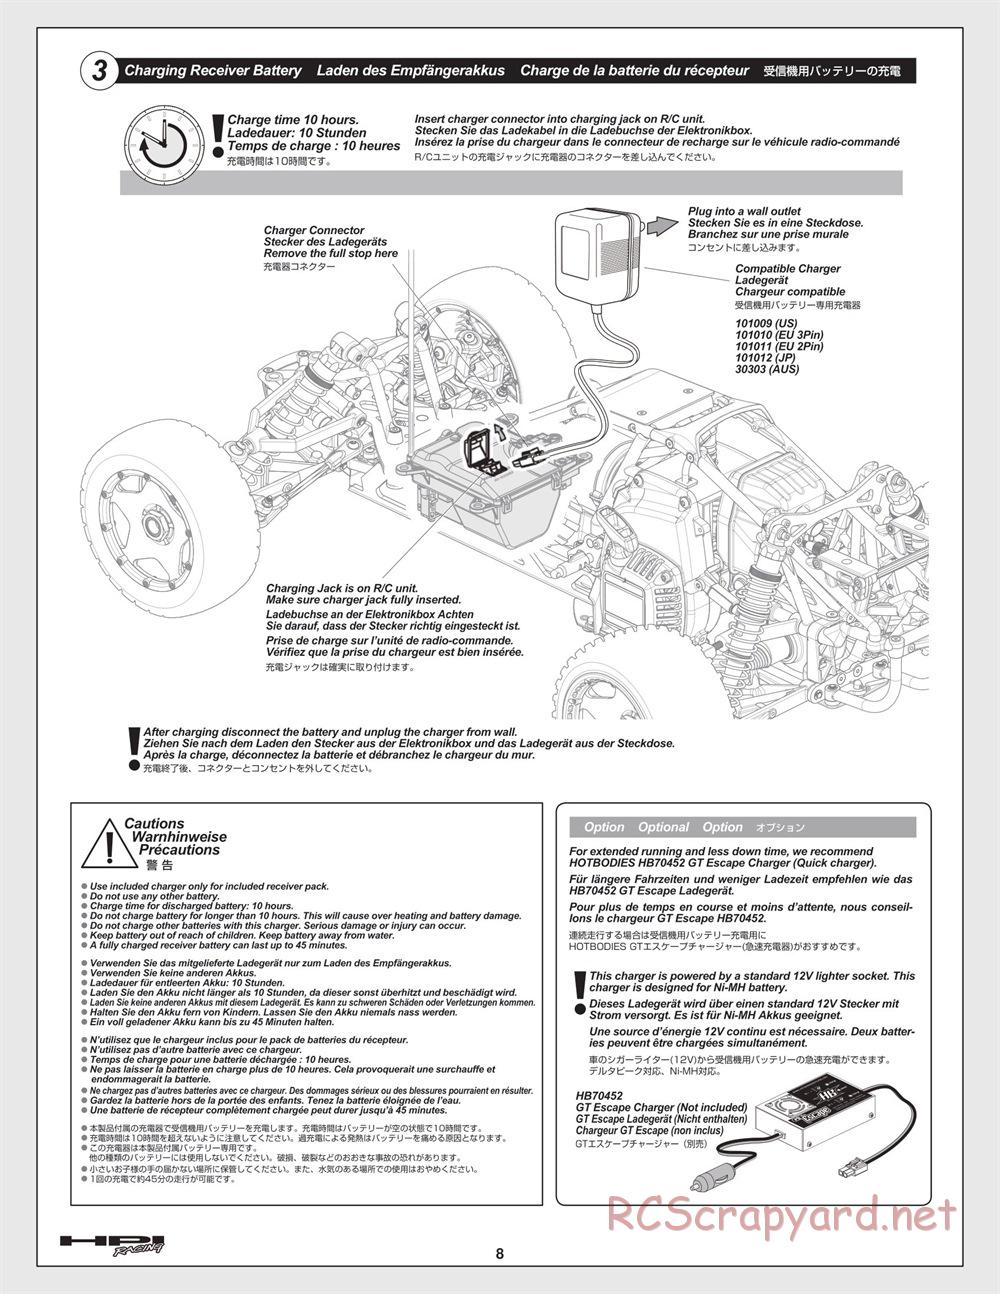 HPI - Baja 5B 2.0 - Manual - Page 8